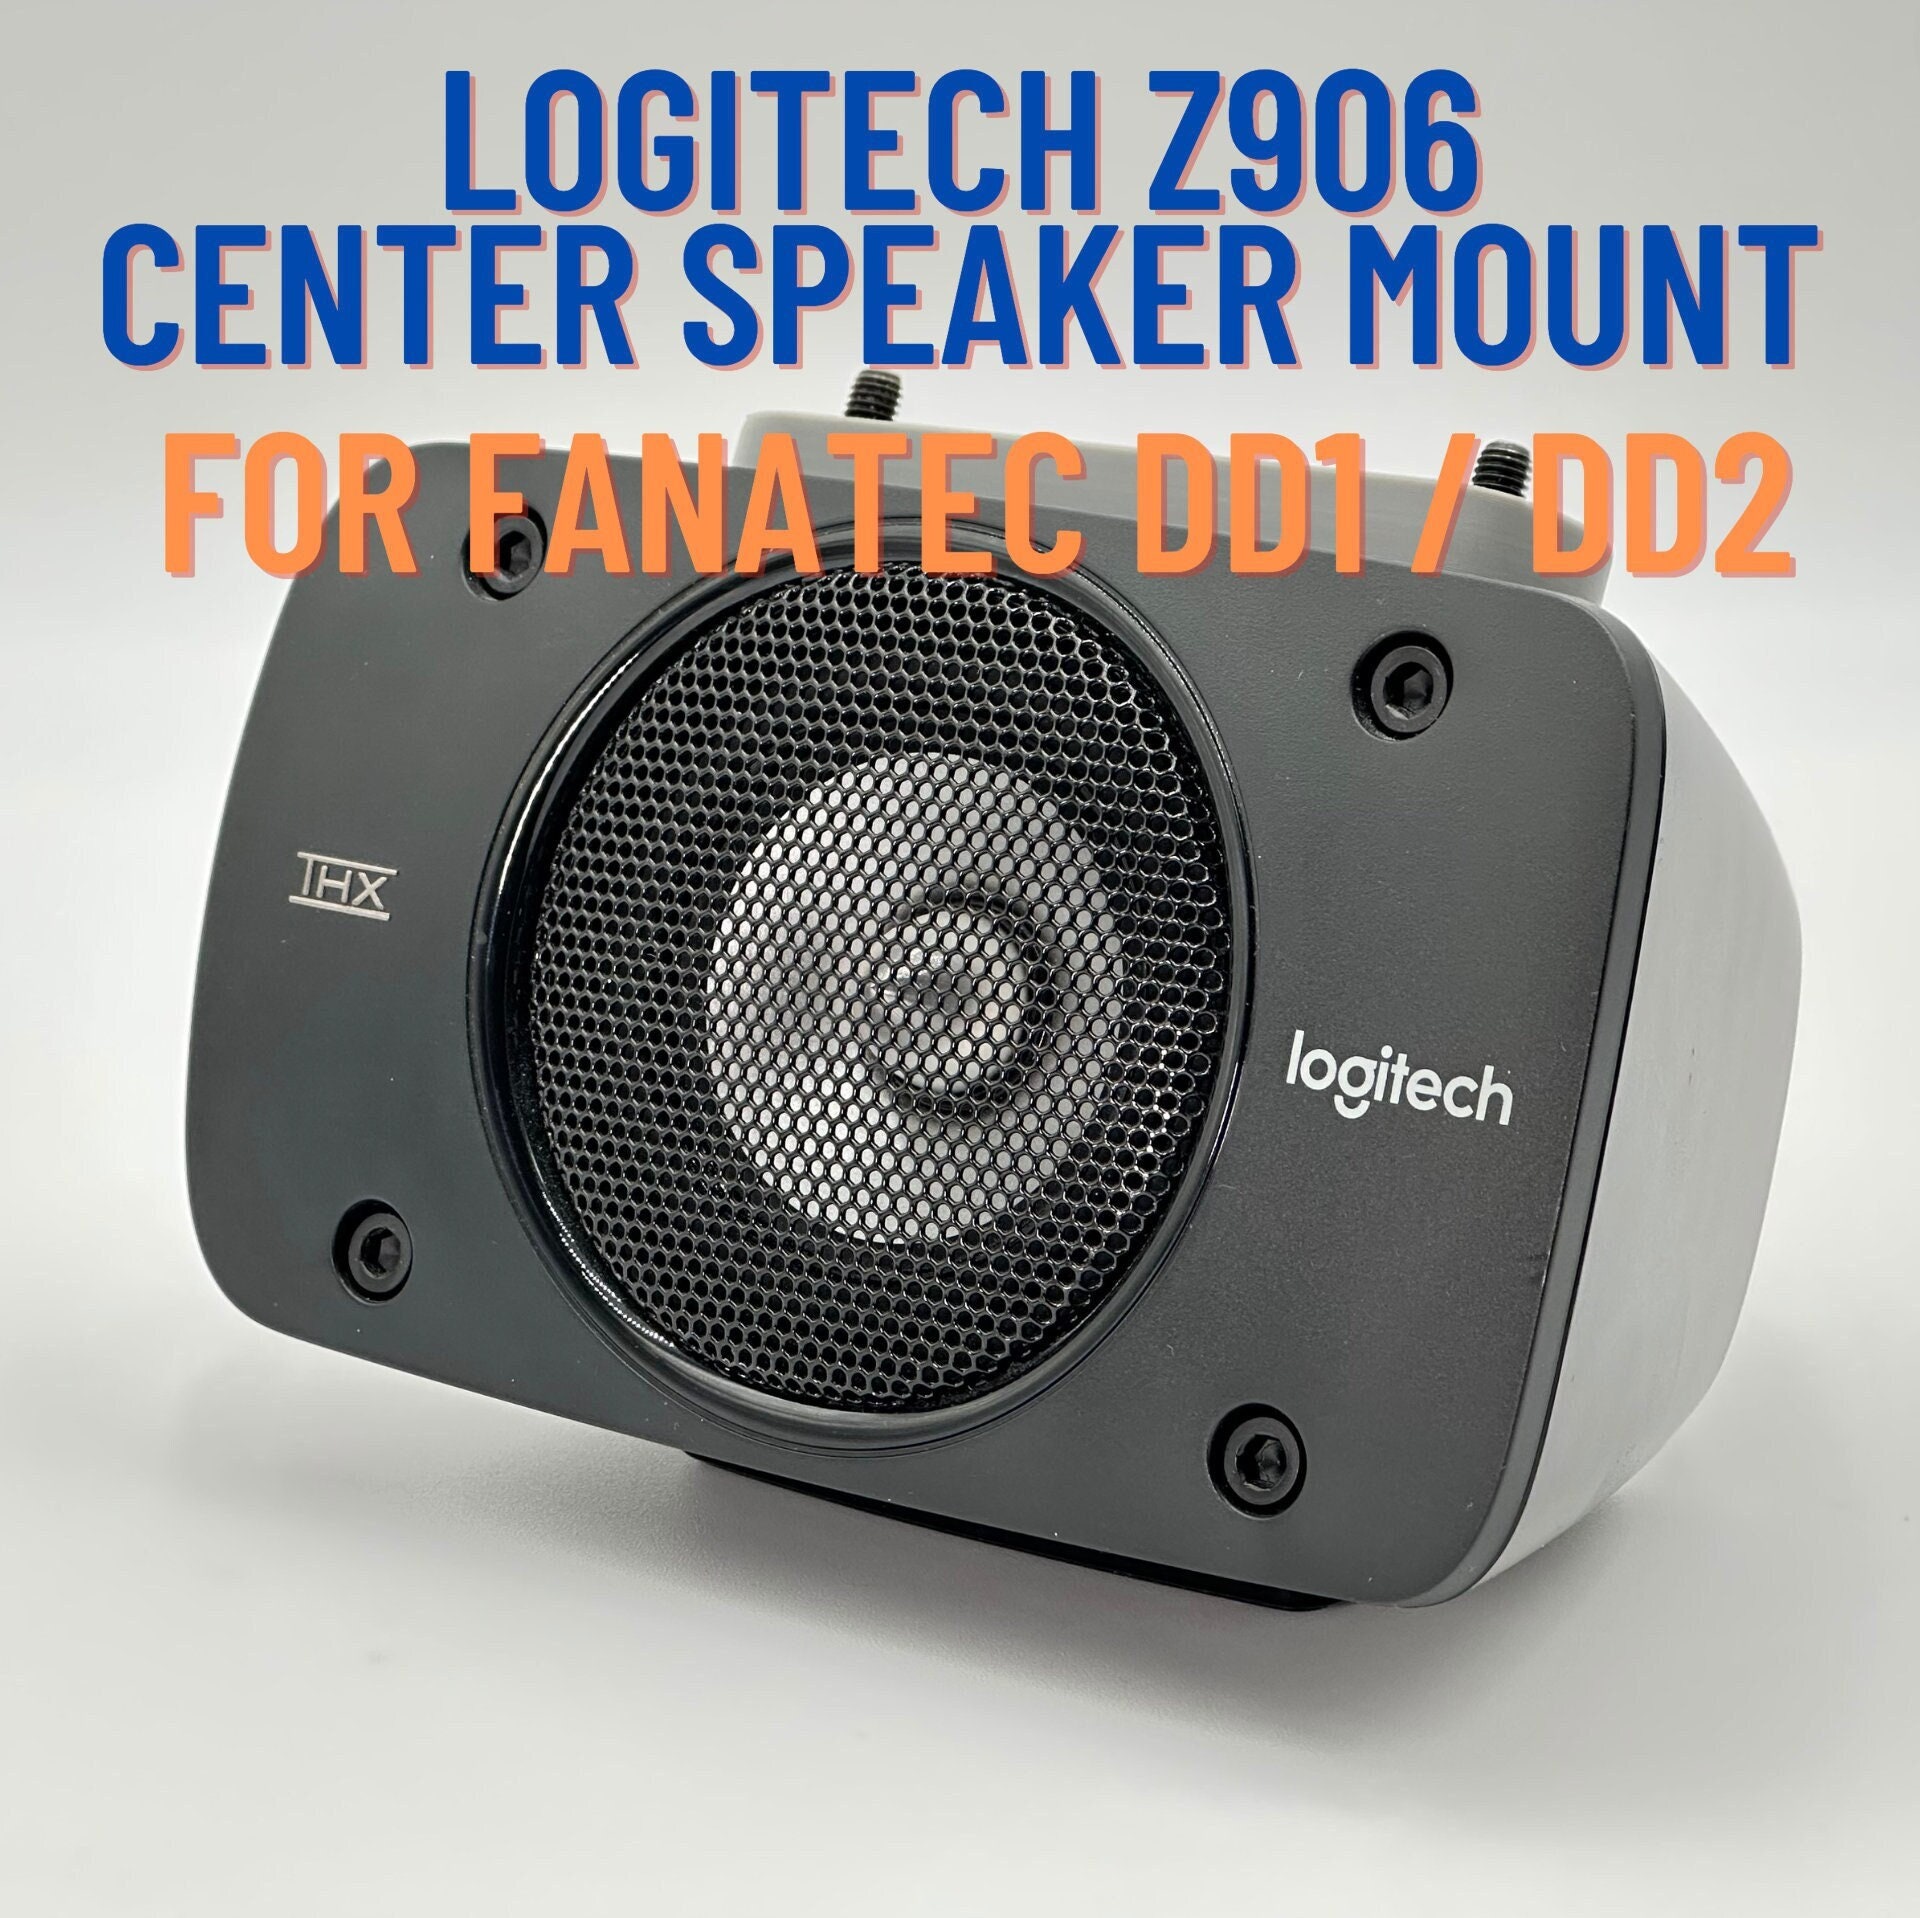 Logitech Z906 Center Speaker Fanatec DD1/2 CSL DD 